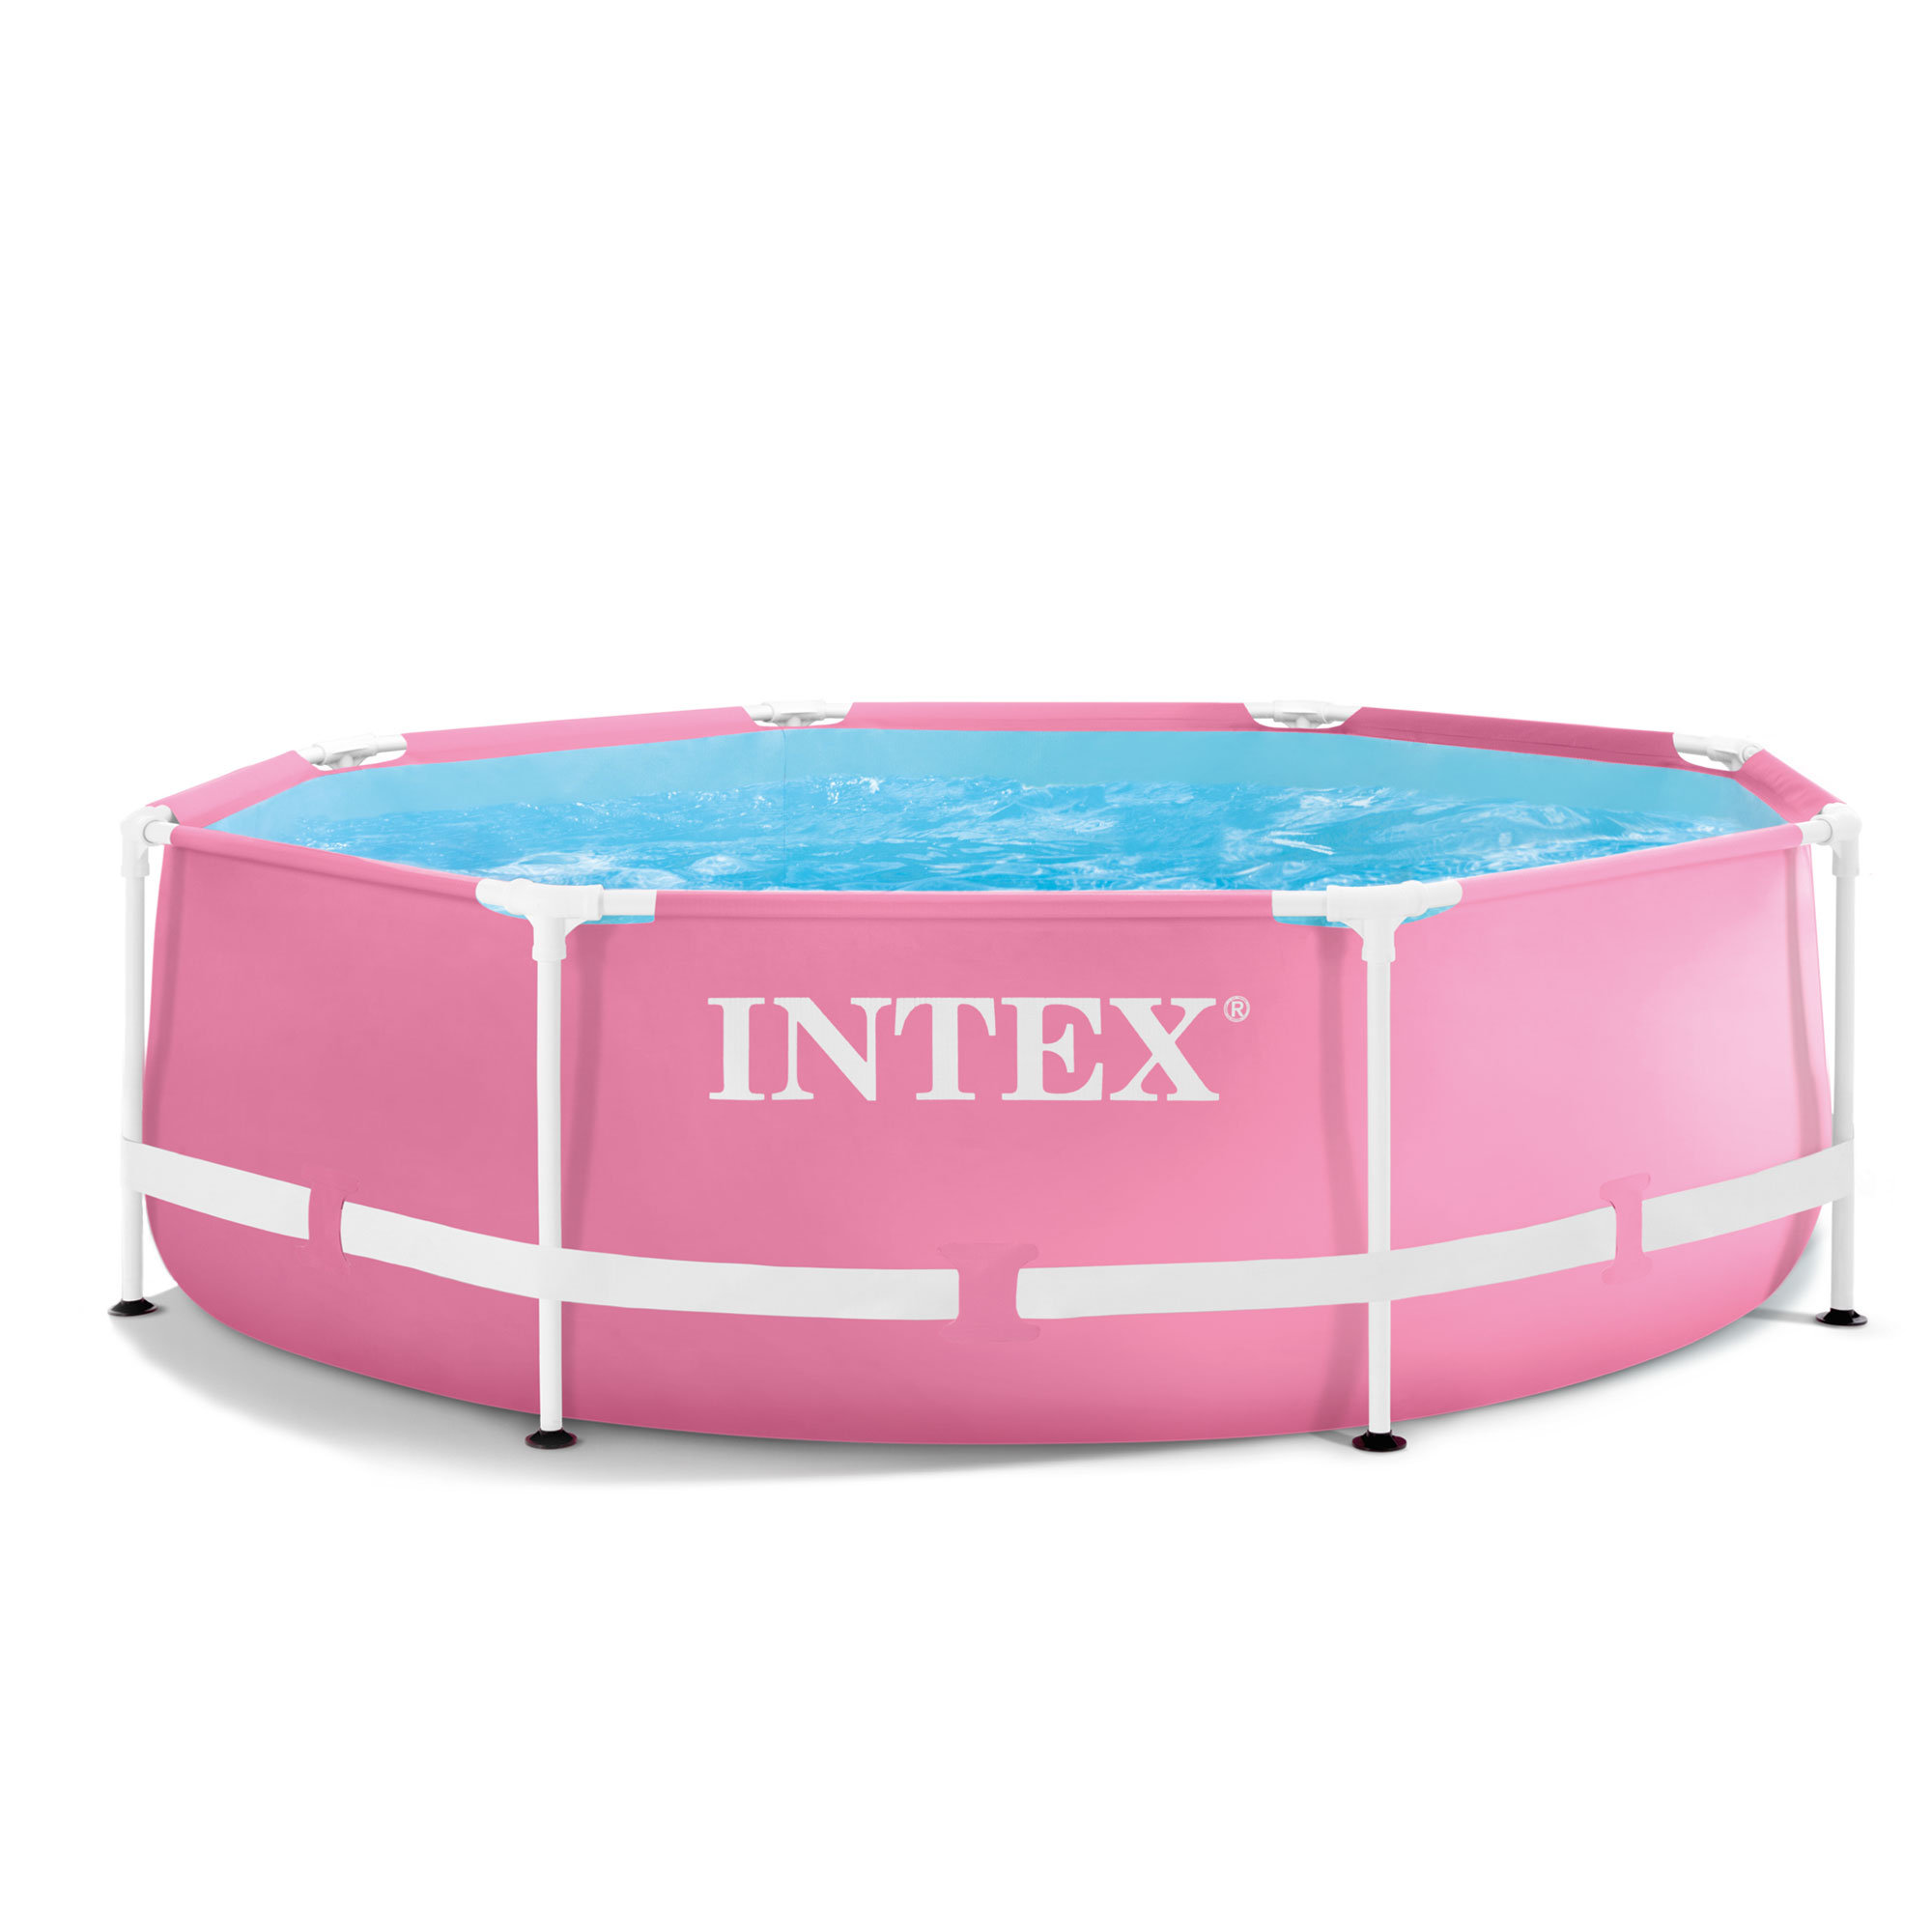 Intex 2.5ft x 8ft Plastic Frame Set Pool & Reviews | Wayfair